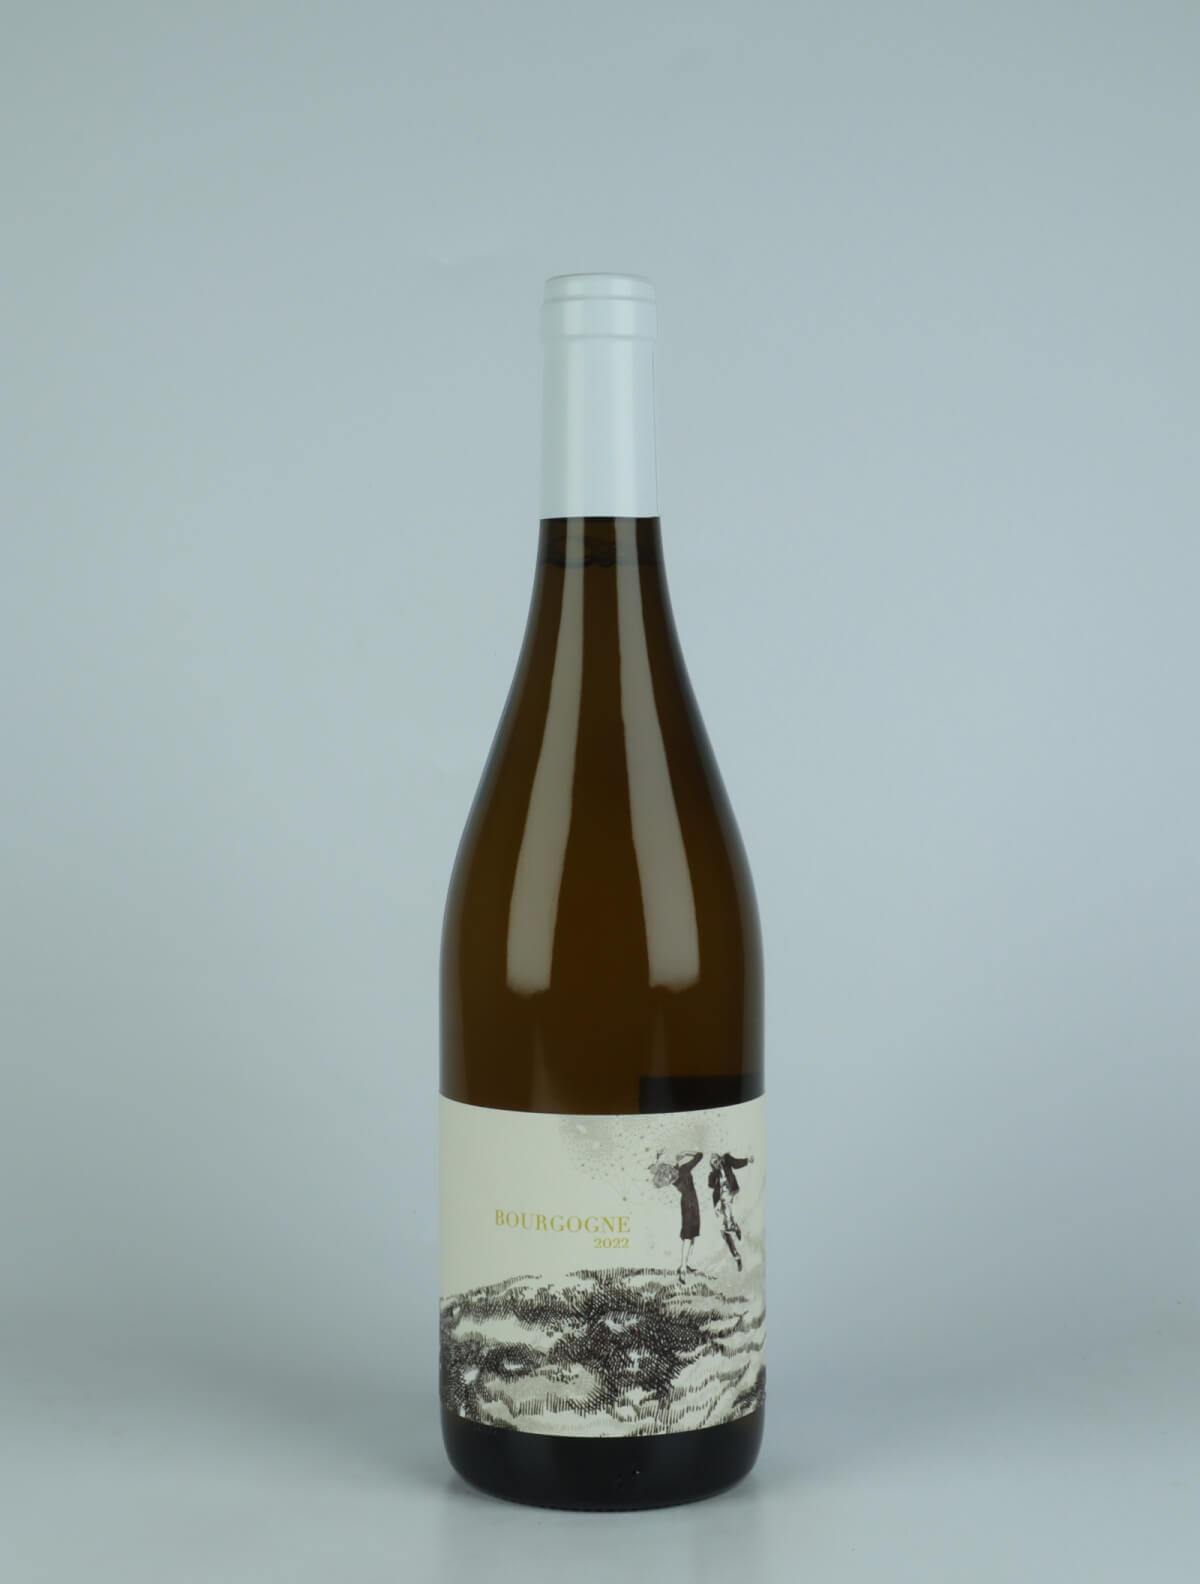 En flaske 2022 Bourgogne Blanc Hvidvin fra Domaine Didon, Bourgogne i Frankrig